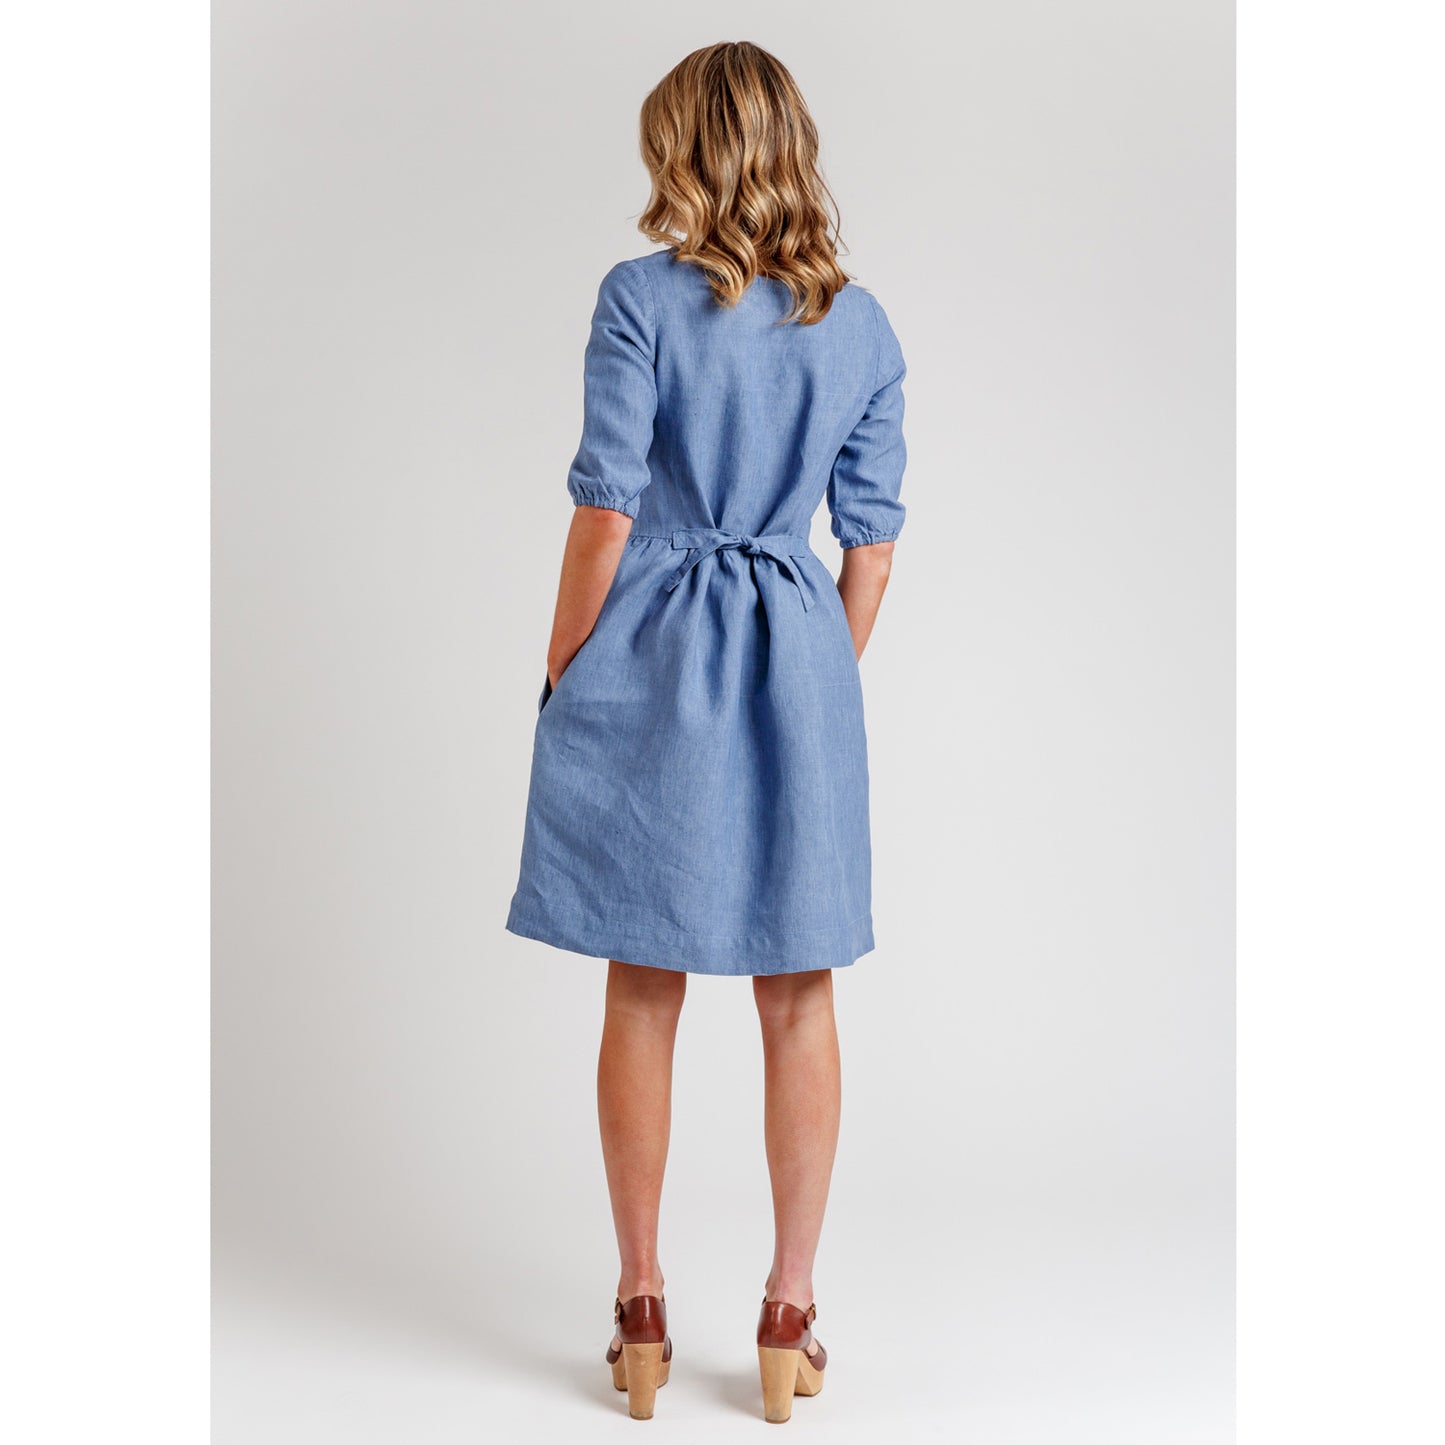 Darling Ranges Dress and Blouse Sewing Pattern - Megan Nielsen Patterns